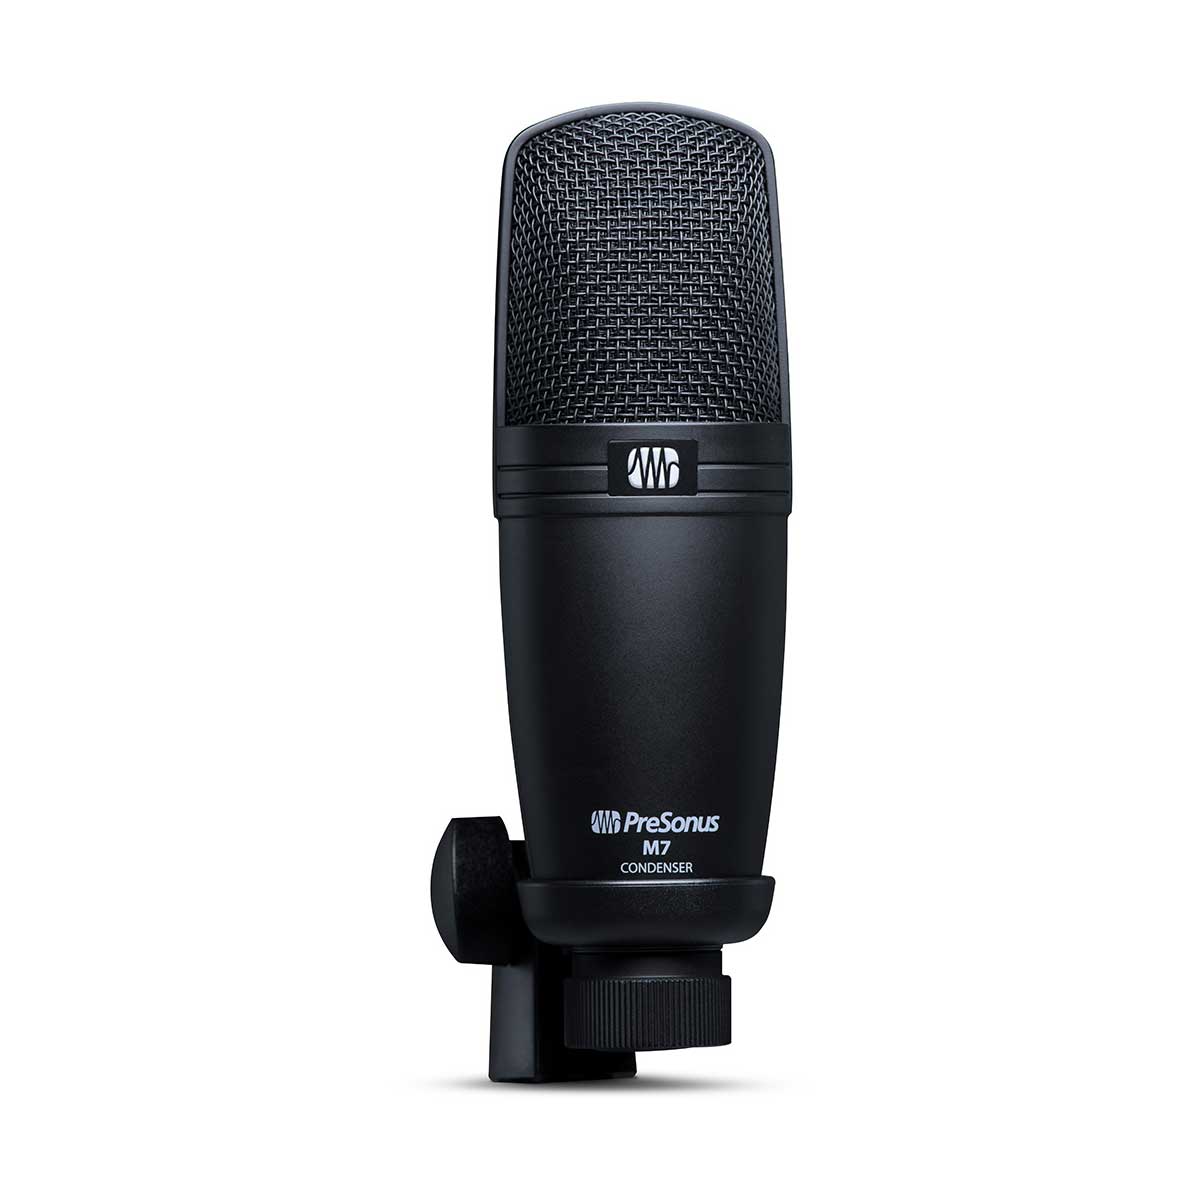 PreSonus M7 MK II condenser microphone